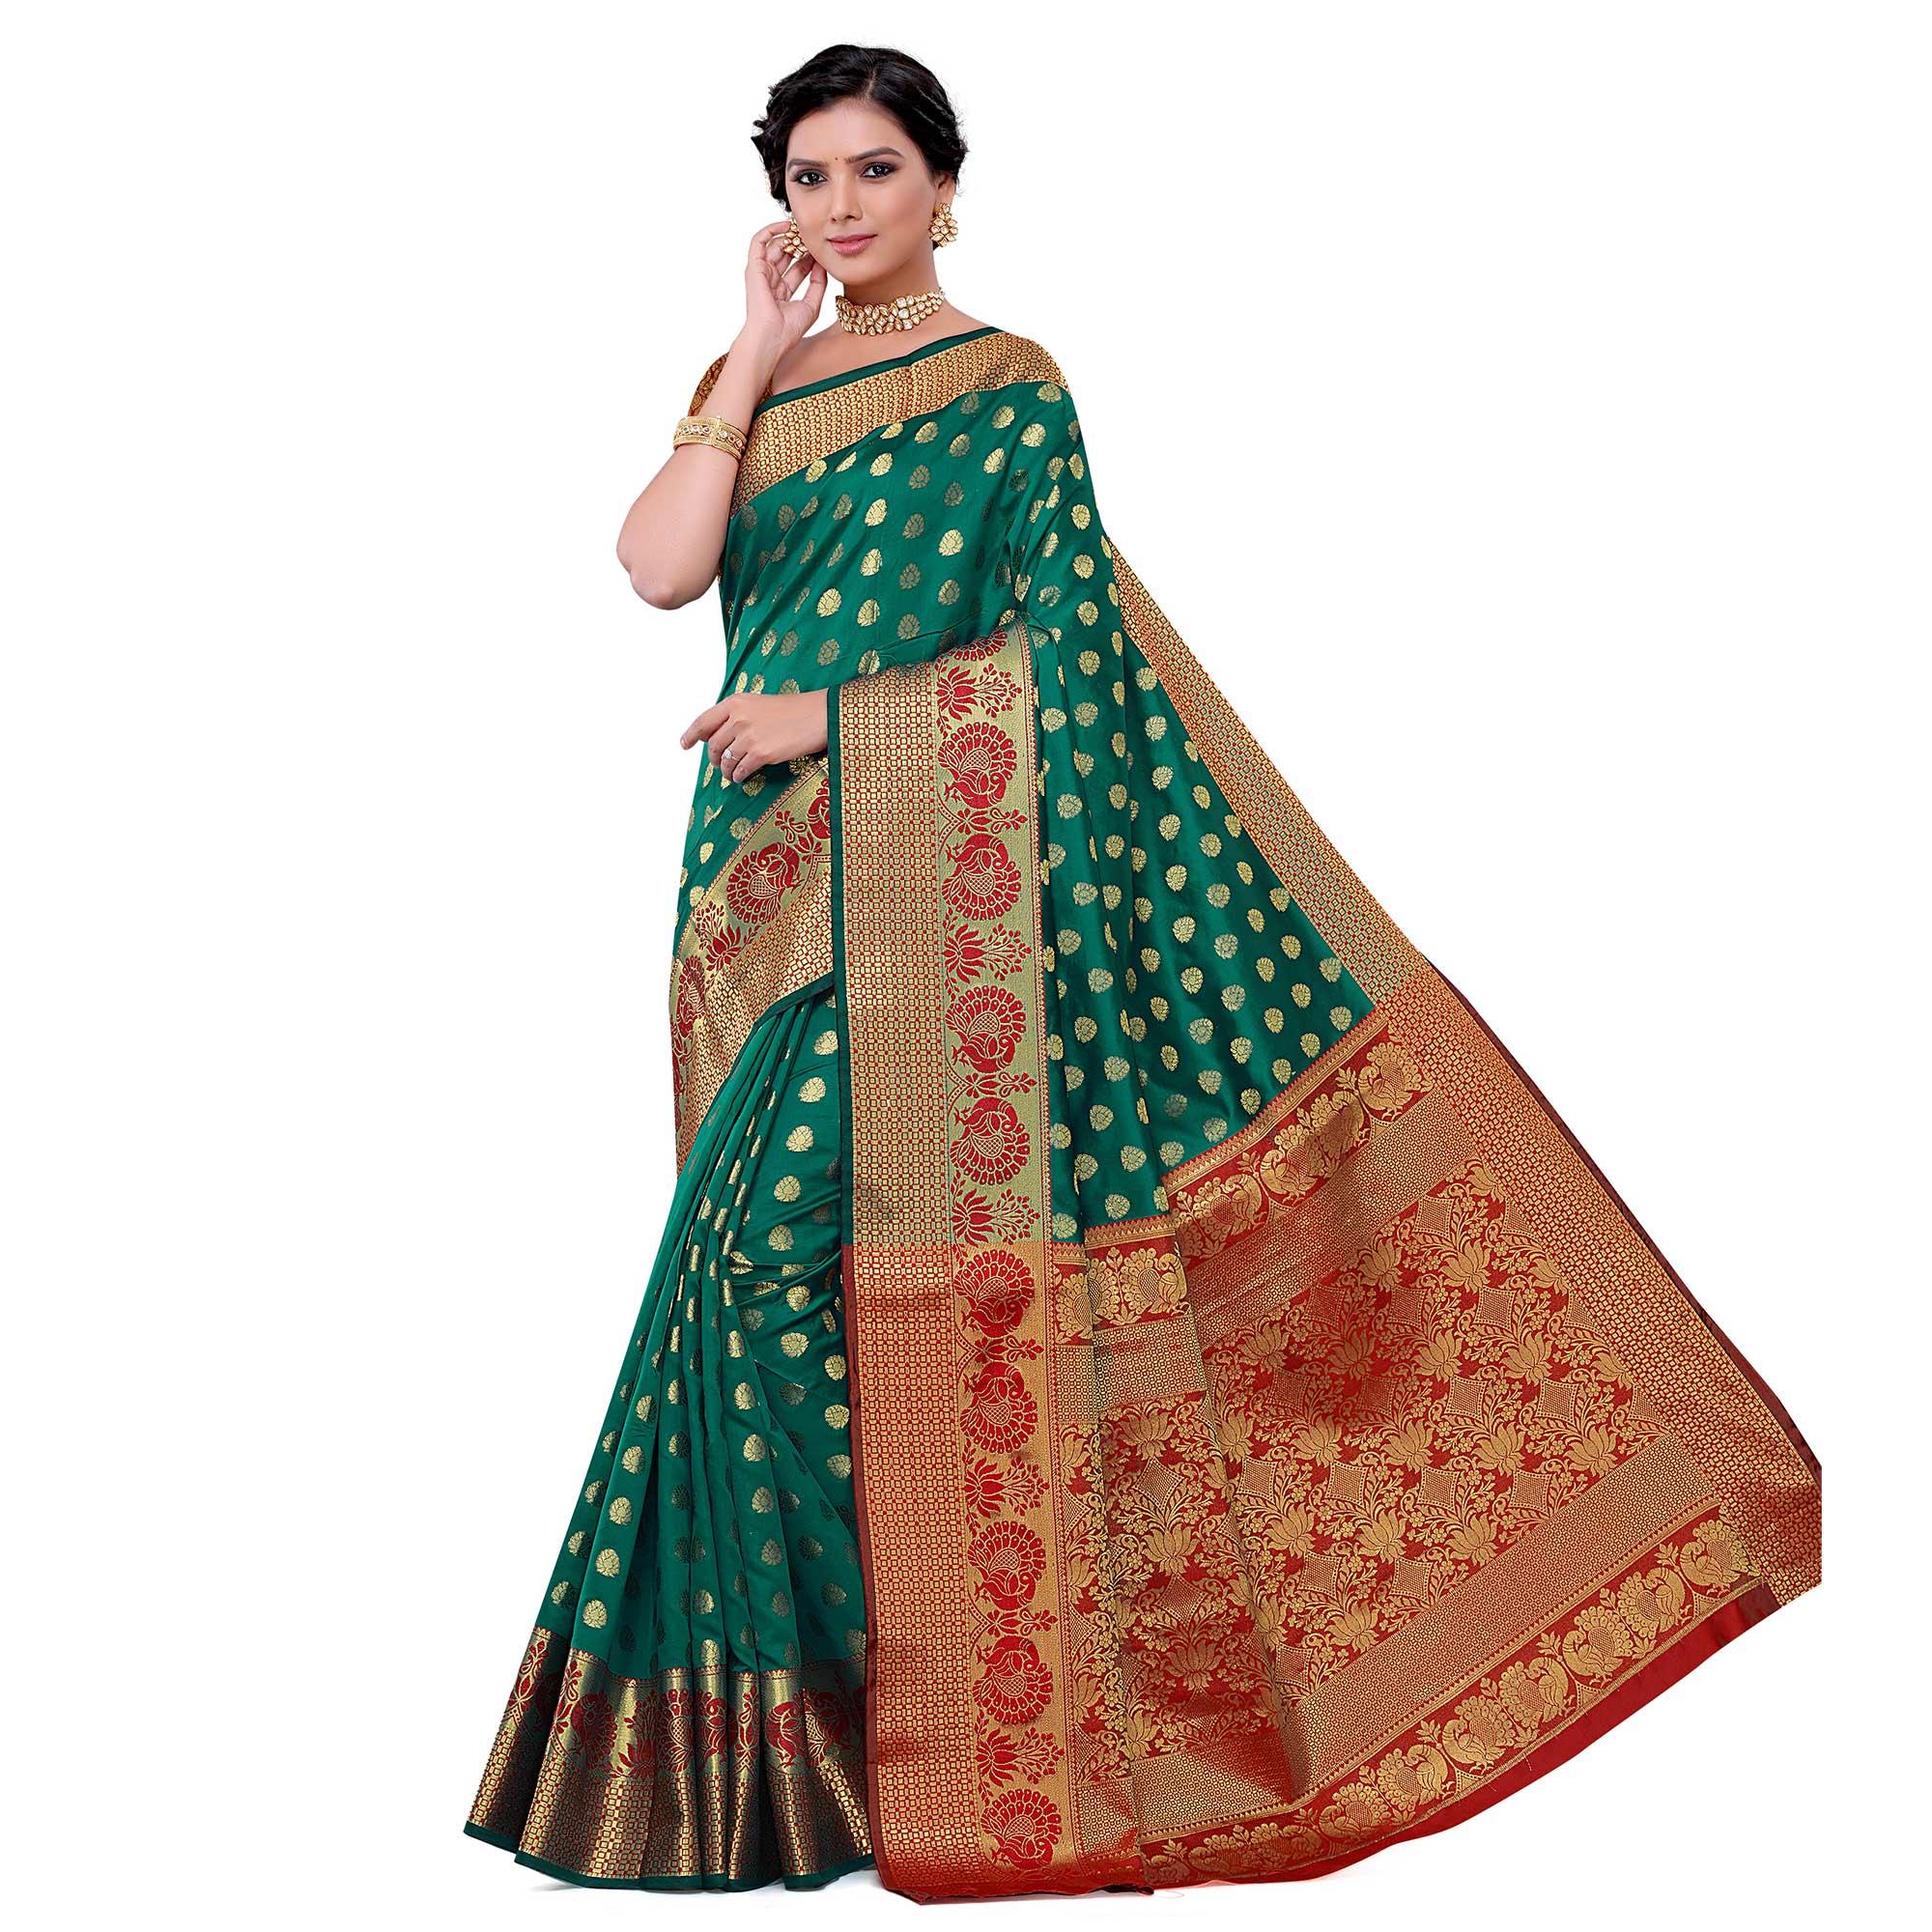 Dazzling Rama Green Colored Festive Wear Woven Kota Art Silk Banarasi Saree - Peachmode